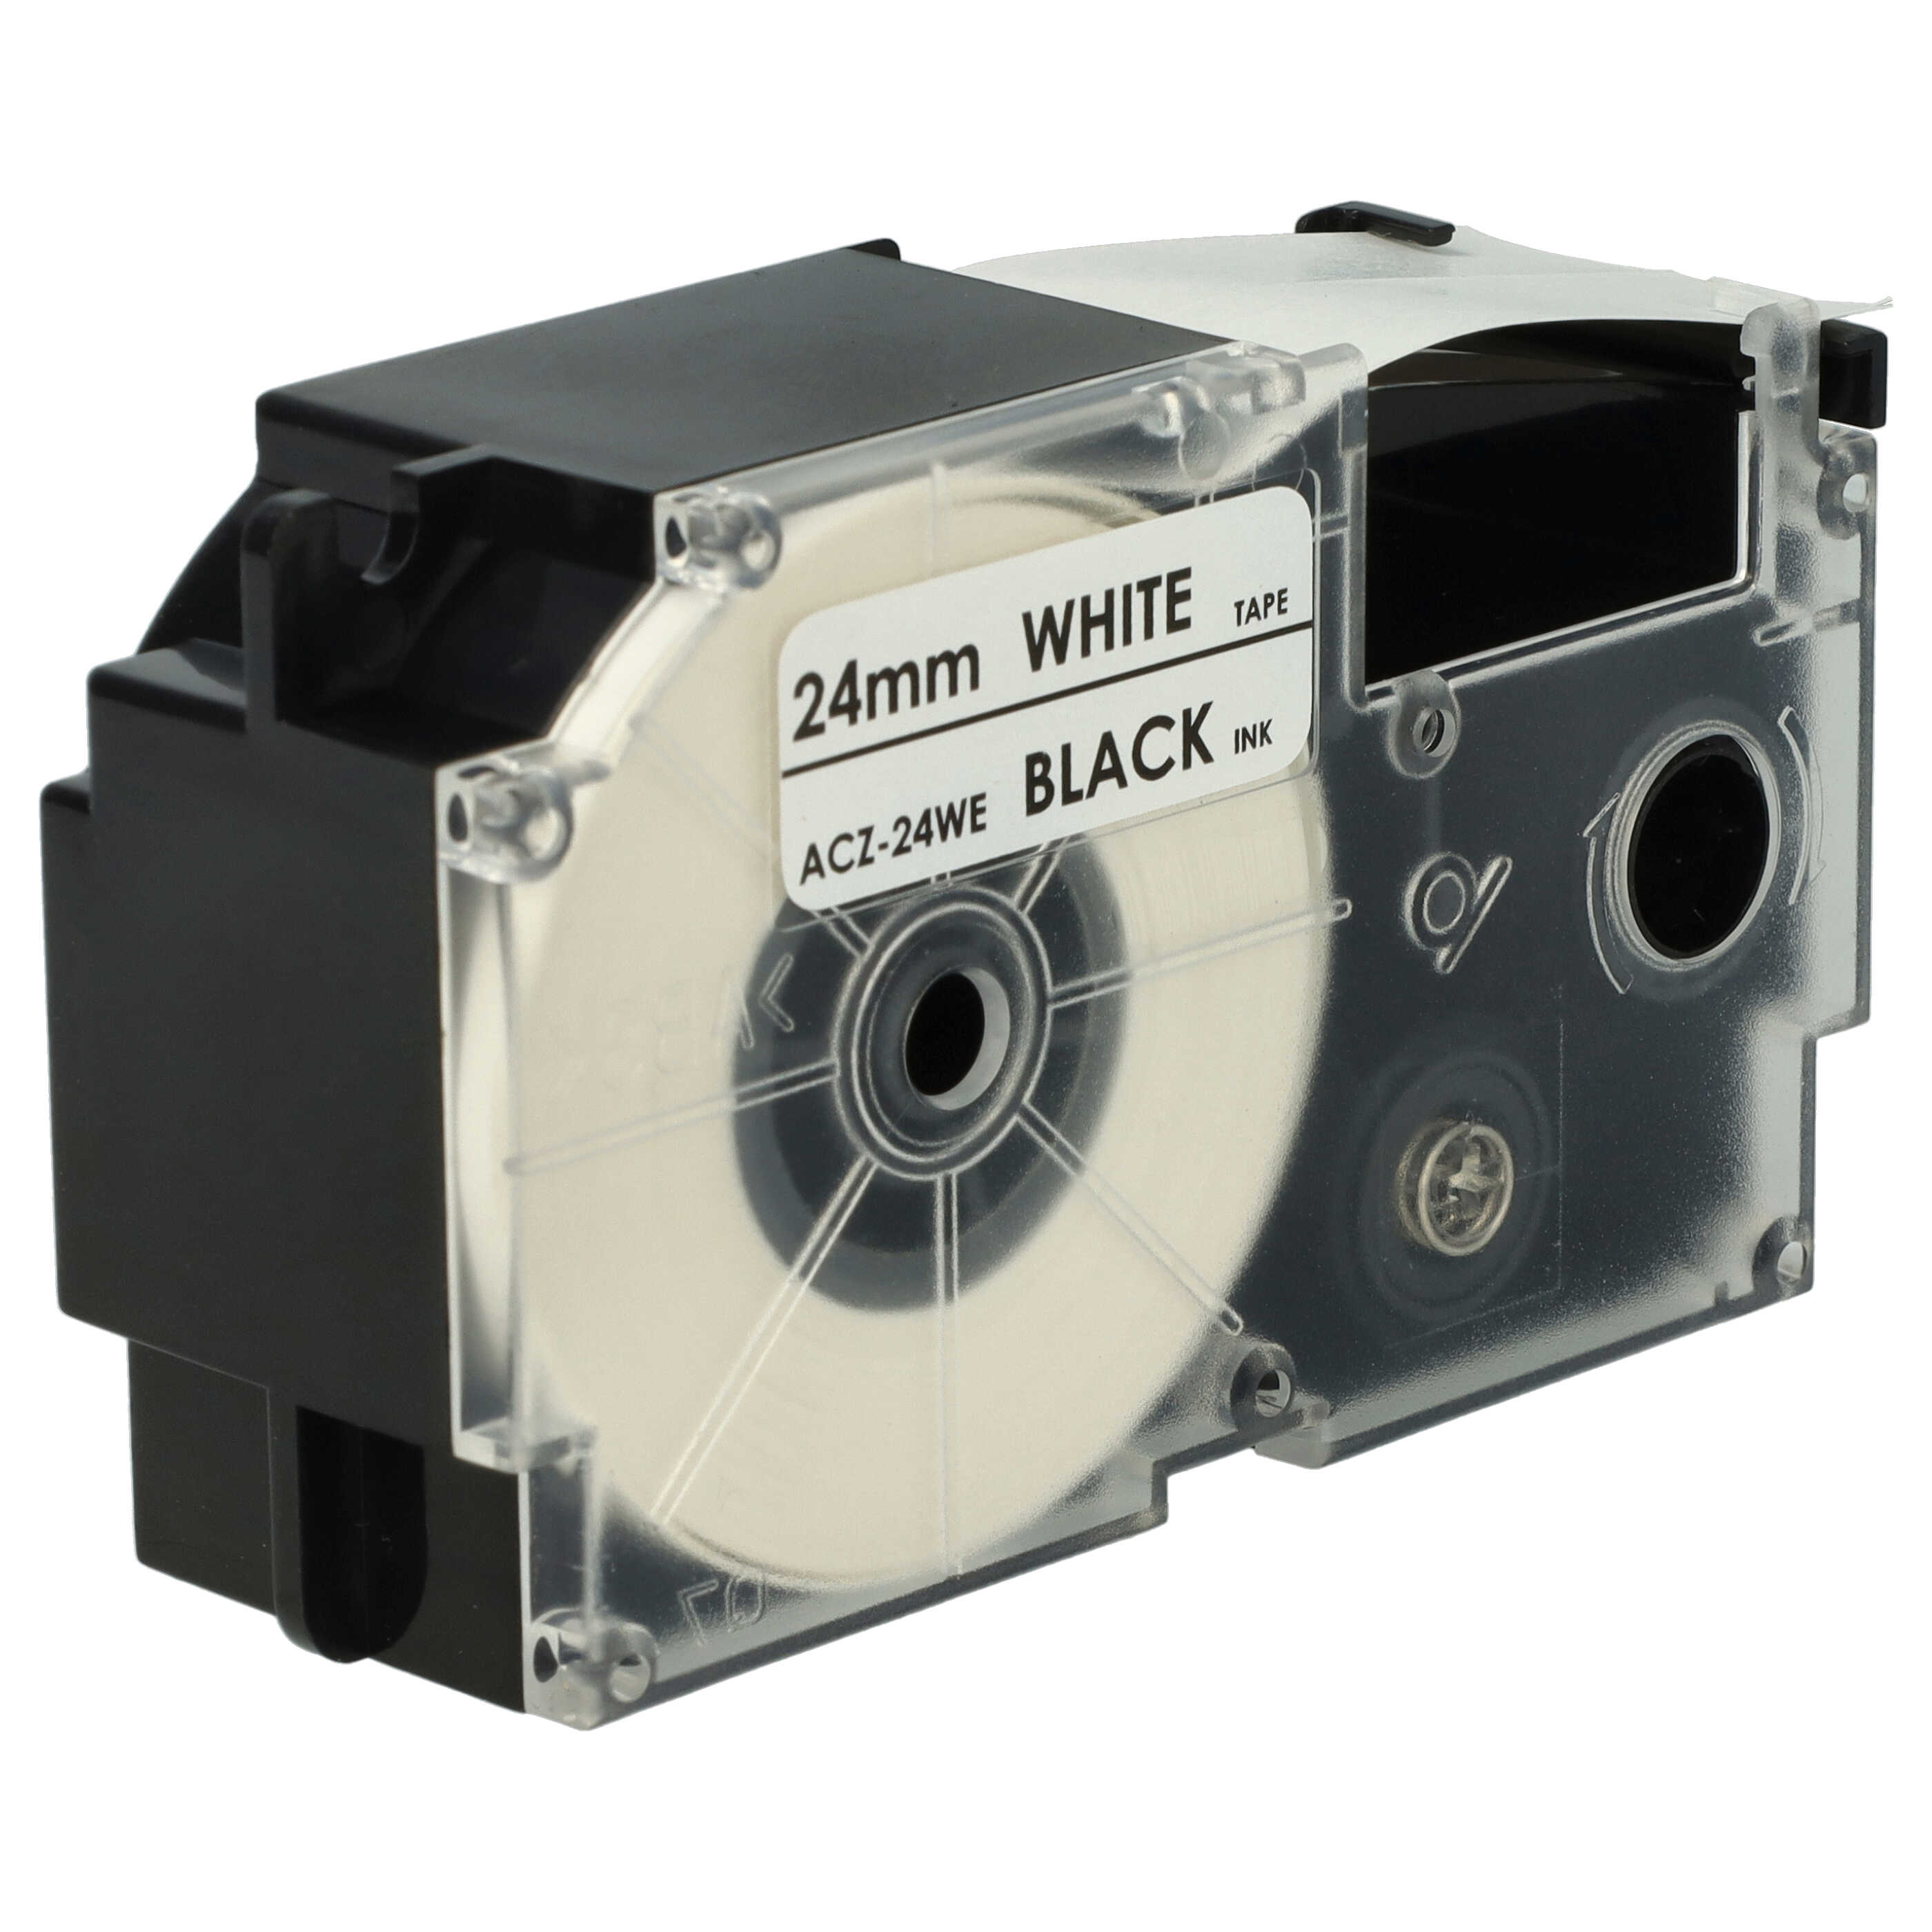 5x Cassetta nastro sostituisce Casio XR-24WE1 per etichettatrice Casio 24mm nero su bianco